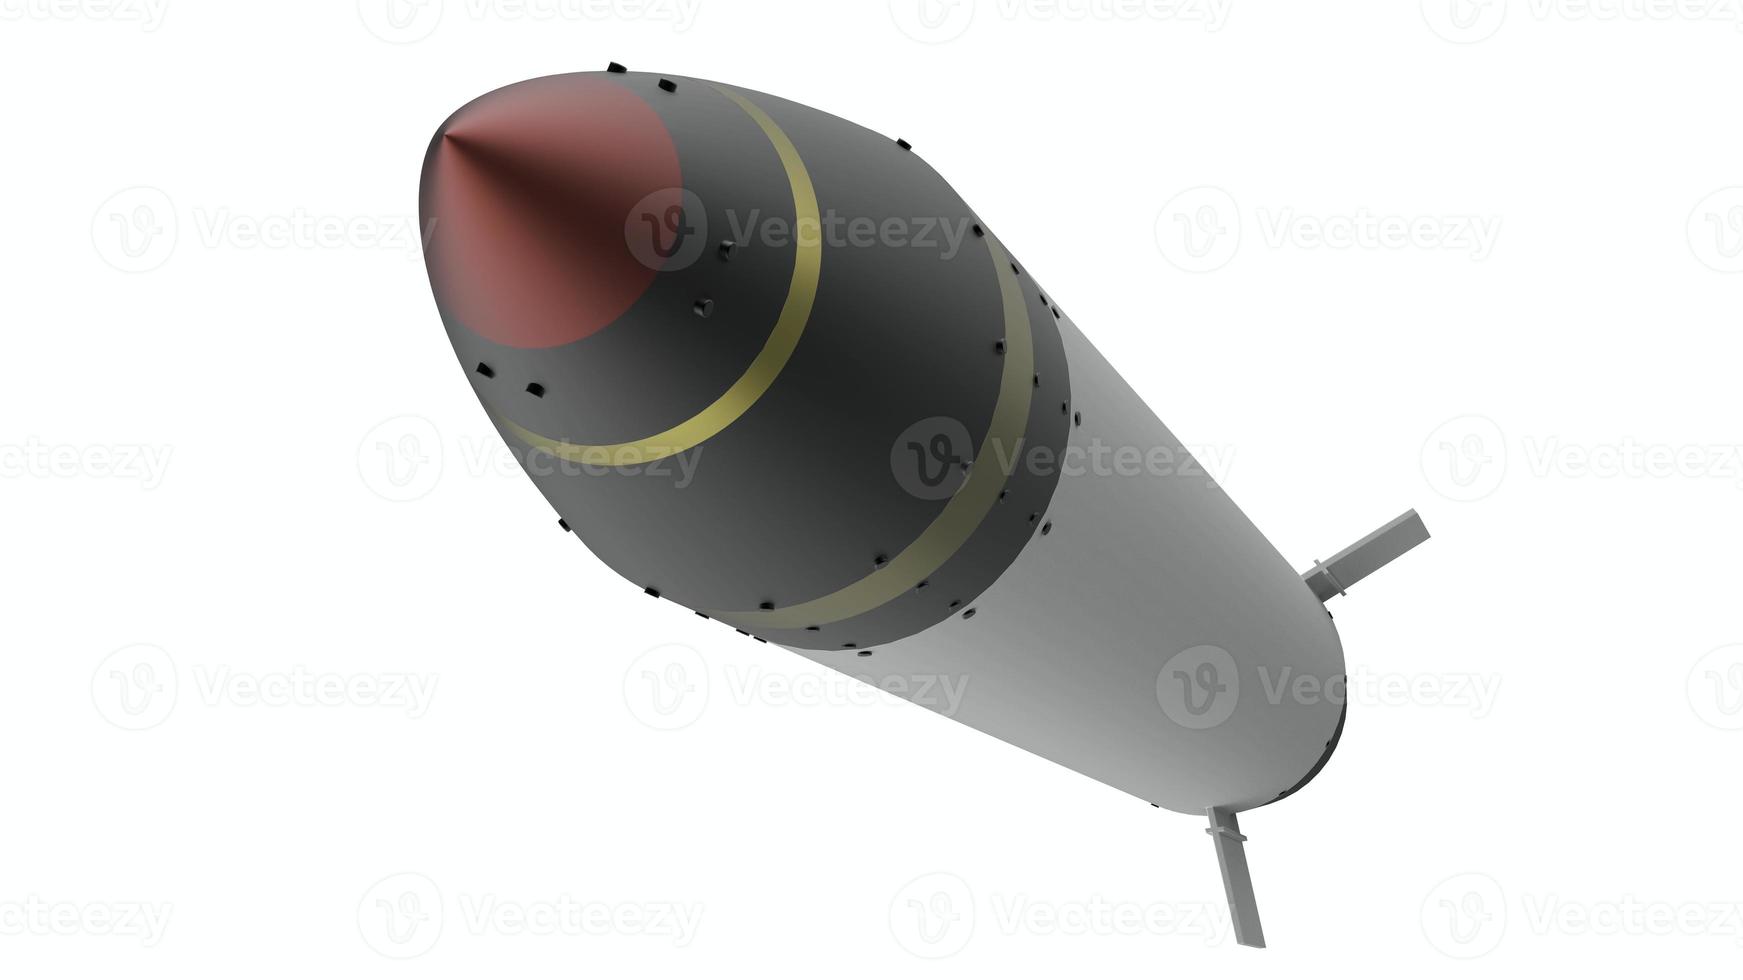 rakete rakete krieg konflikt munition sprengkopf nuklear militar waffe nuke 3d illustration raumschiff foto